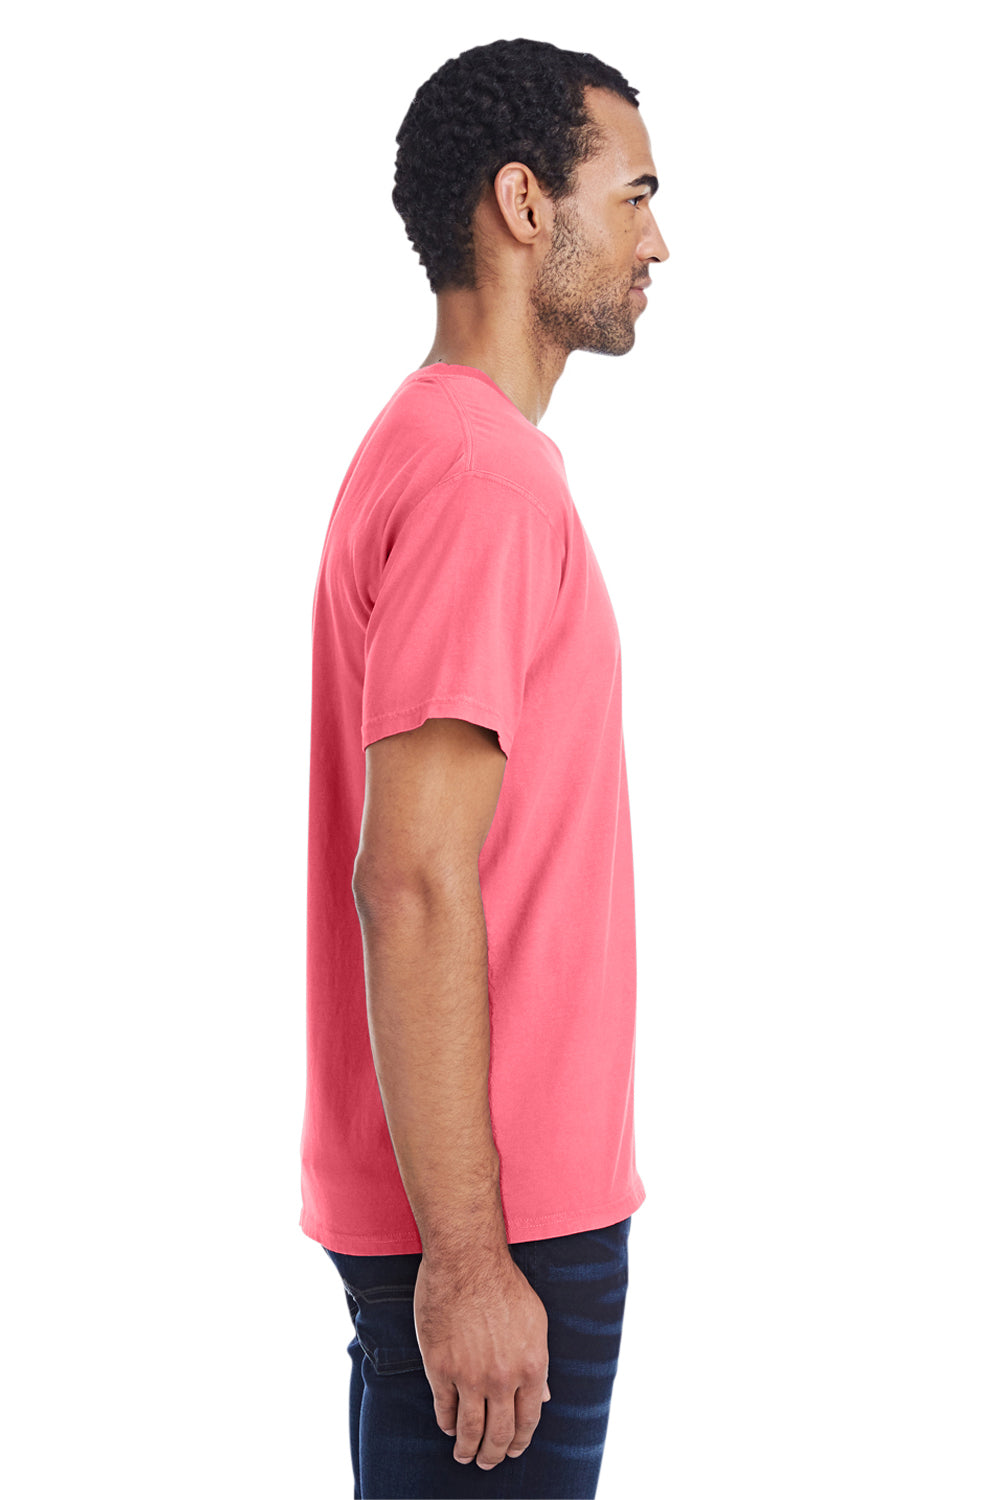 ComfortWash By Hanes GDH150 Mens Short Sleeve Crewneck T-Shirt w/ Pocket Coral Pink Side